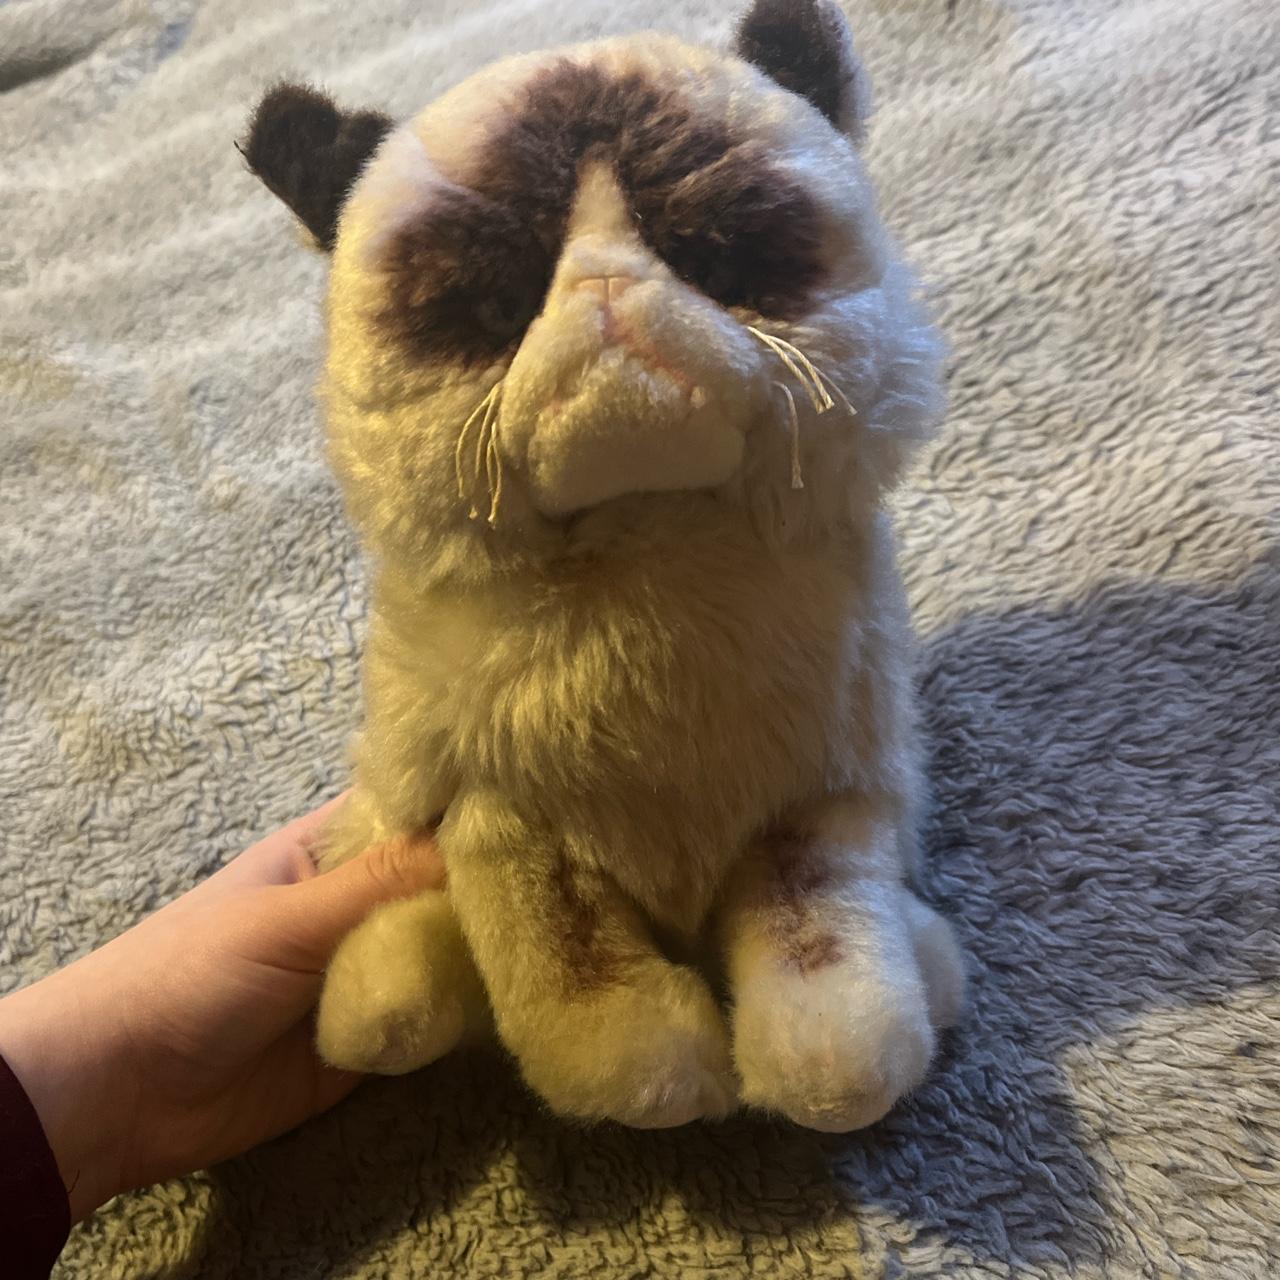 grumpy cat stuffed animal